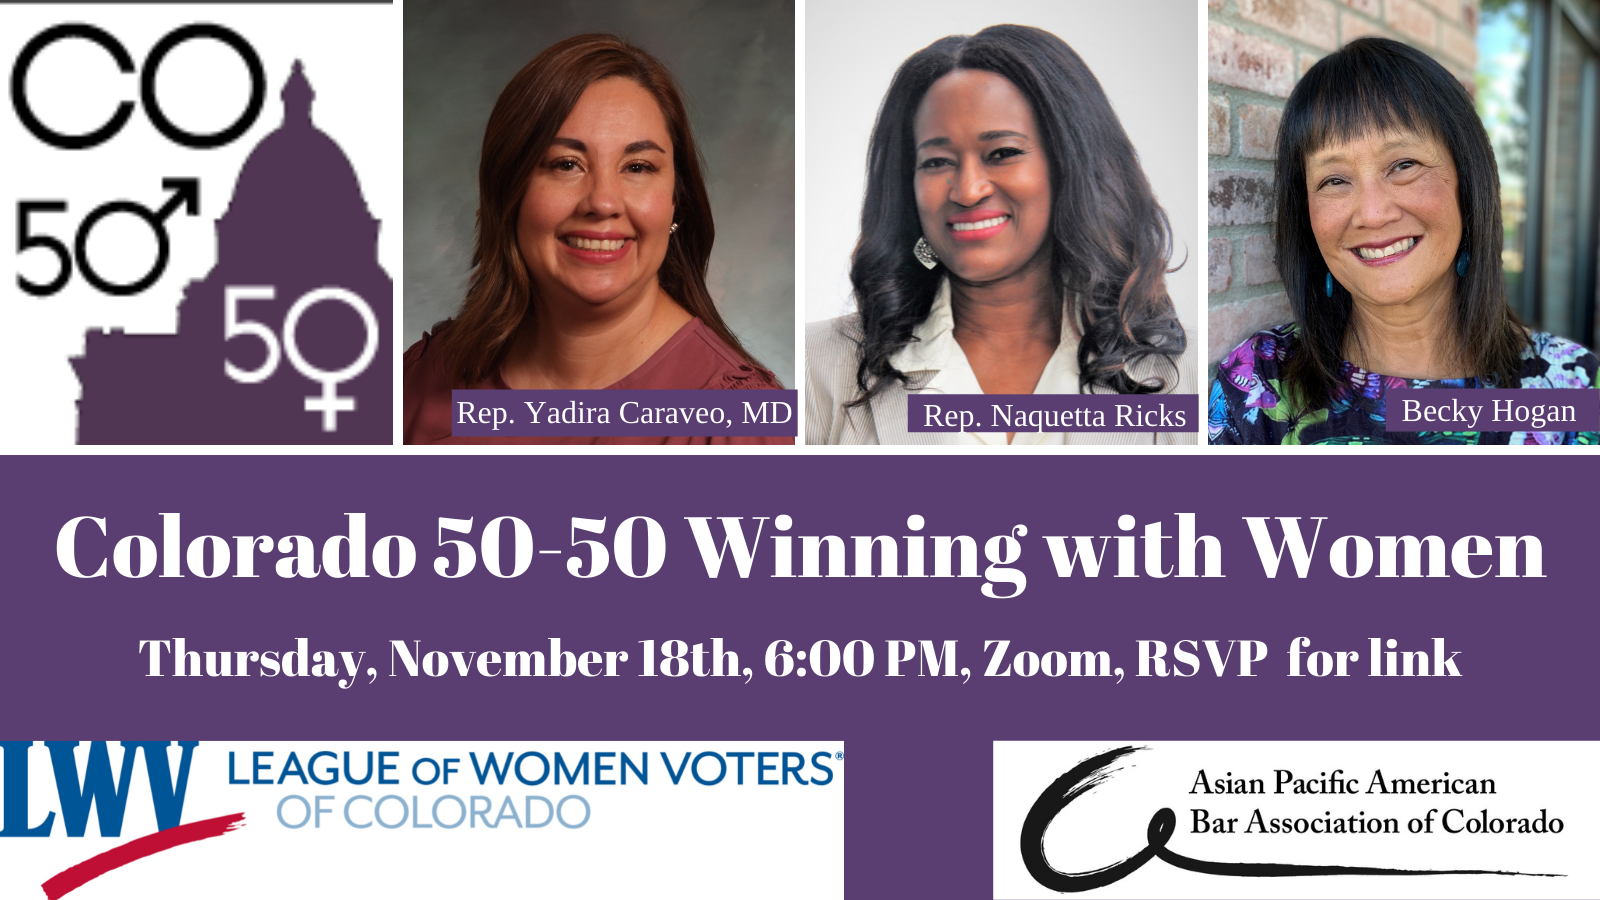 Winning With Women information, including photos of Yadira Caraveo, Naquetta Ricks, and Becky Hogan.